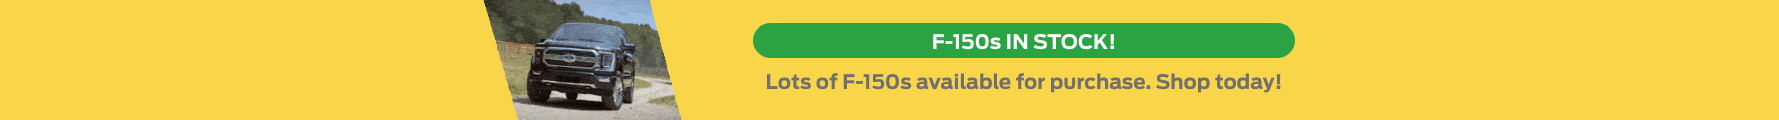 F-150 Trucks in stock banner